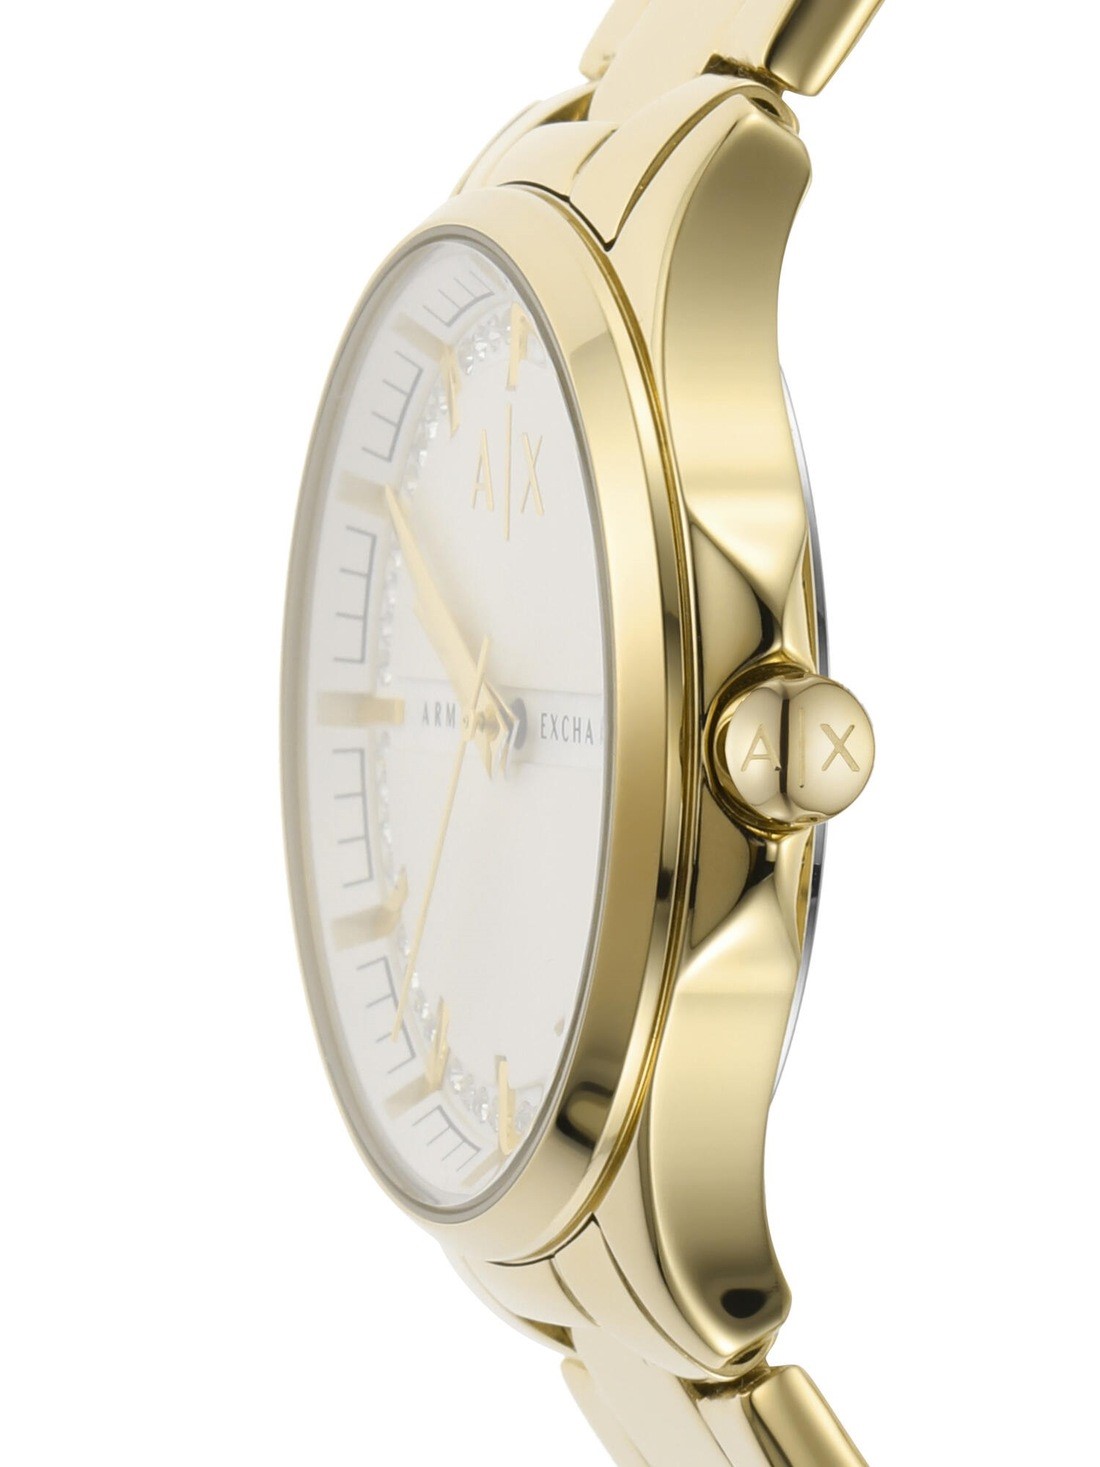 Armani Exchange Gold Watch AX7139SET - Watch Station India